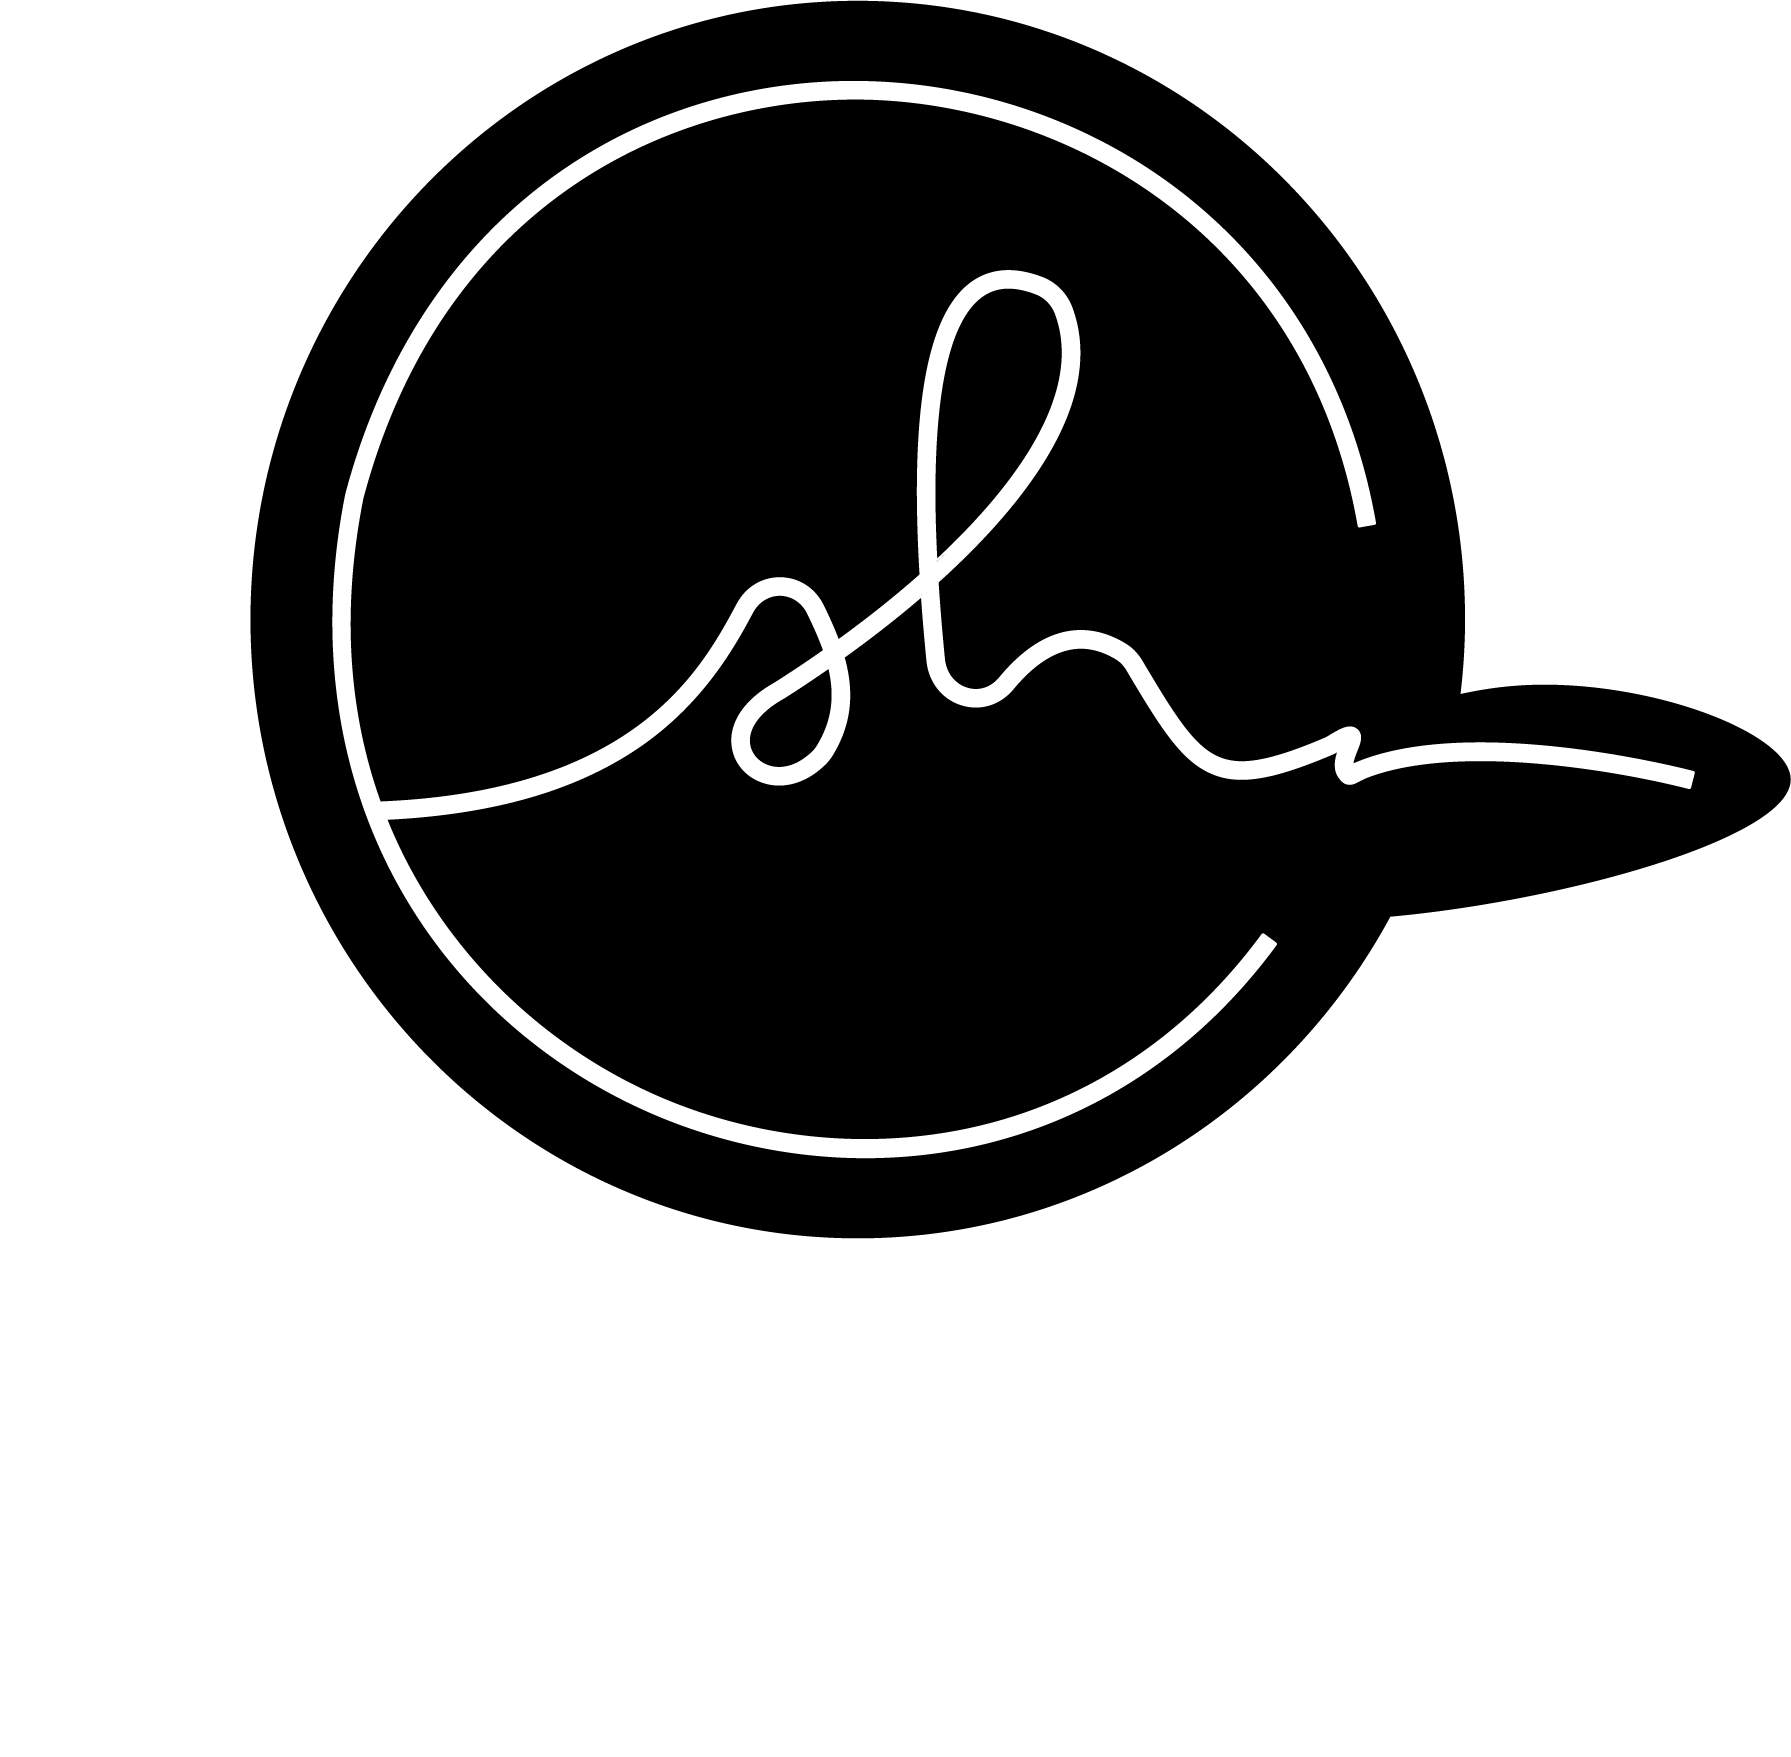 Praxis Dr. Haisch